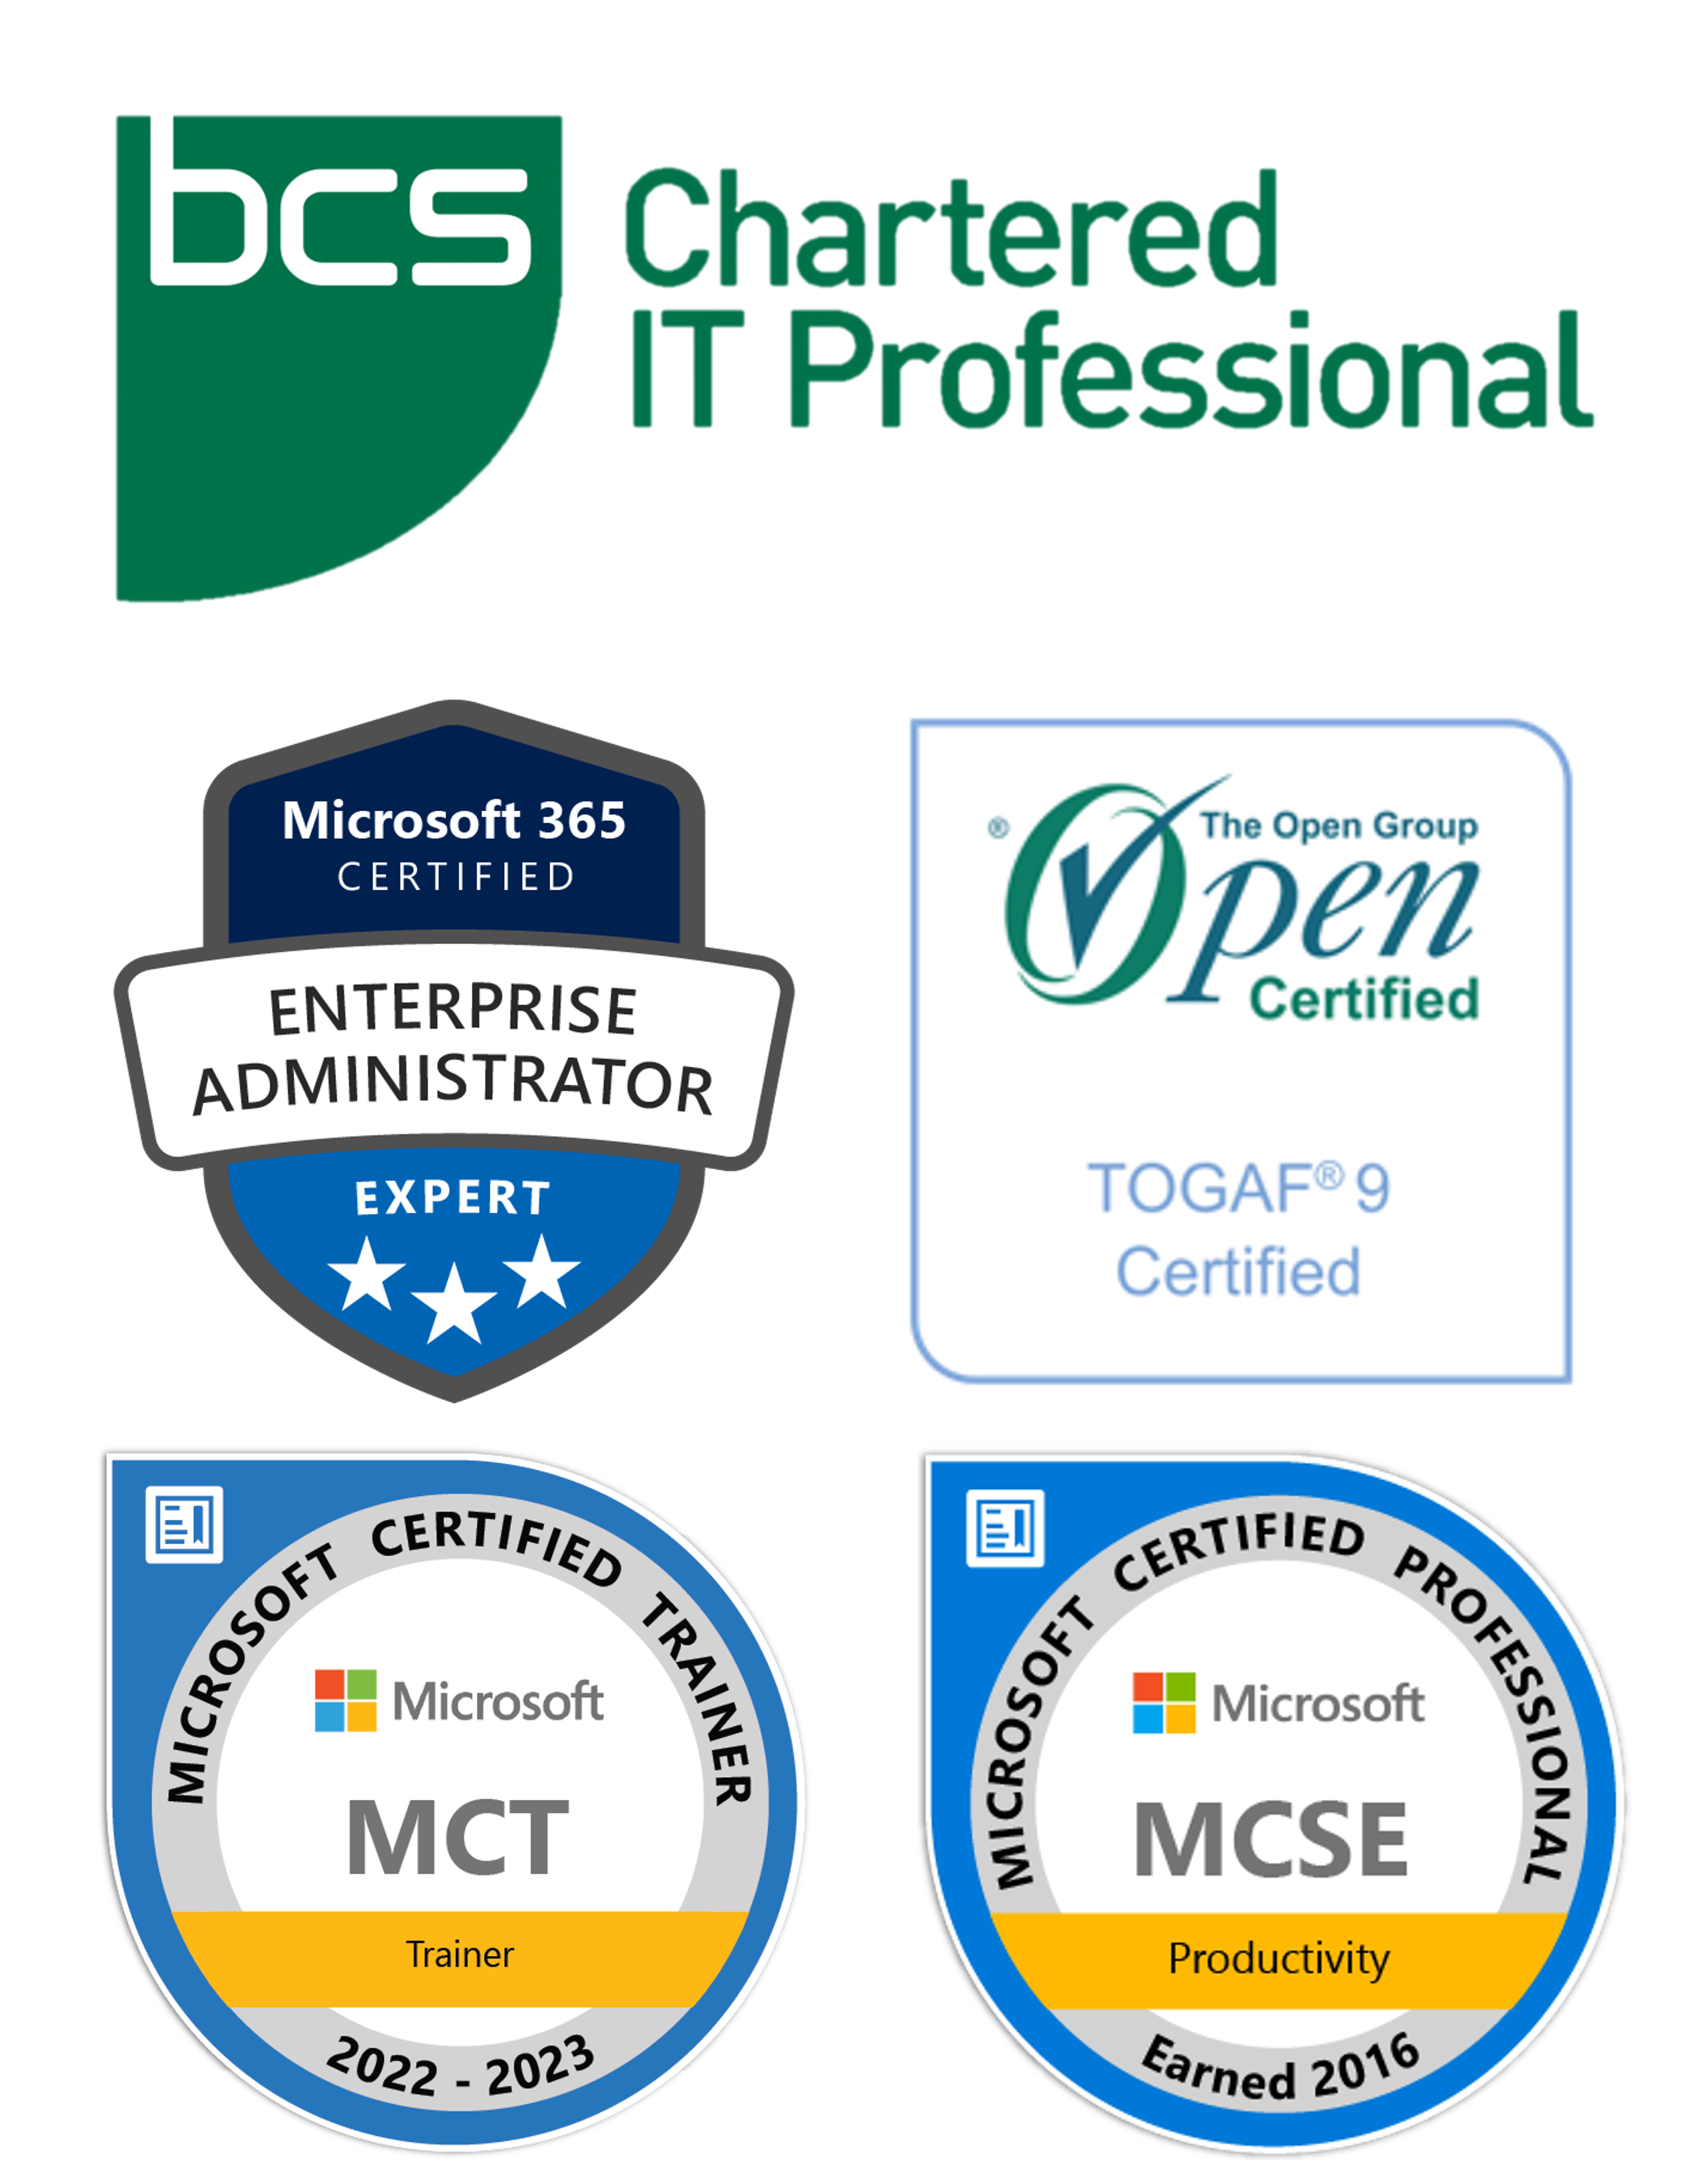 Chirag Patel BCS CITP, Microsoft 365 Certified Enterprise Administrator Expert, TOGAF9 Certified Architect